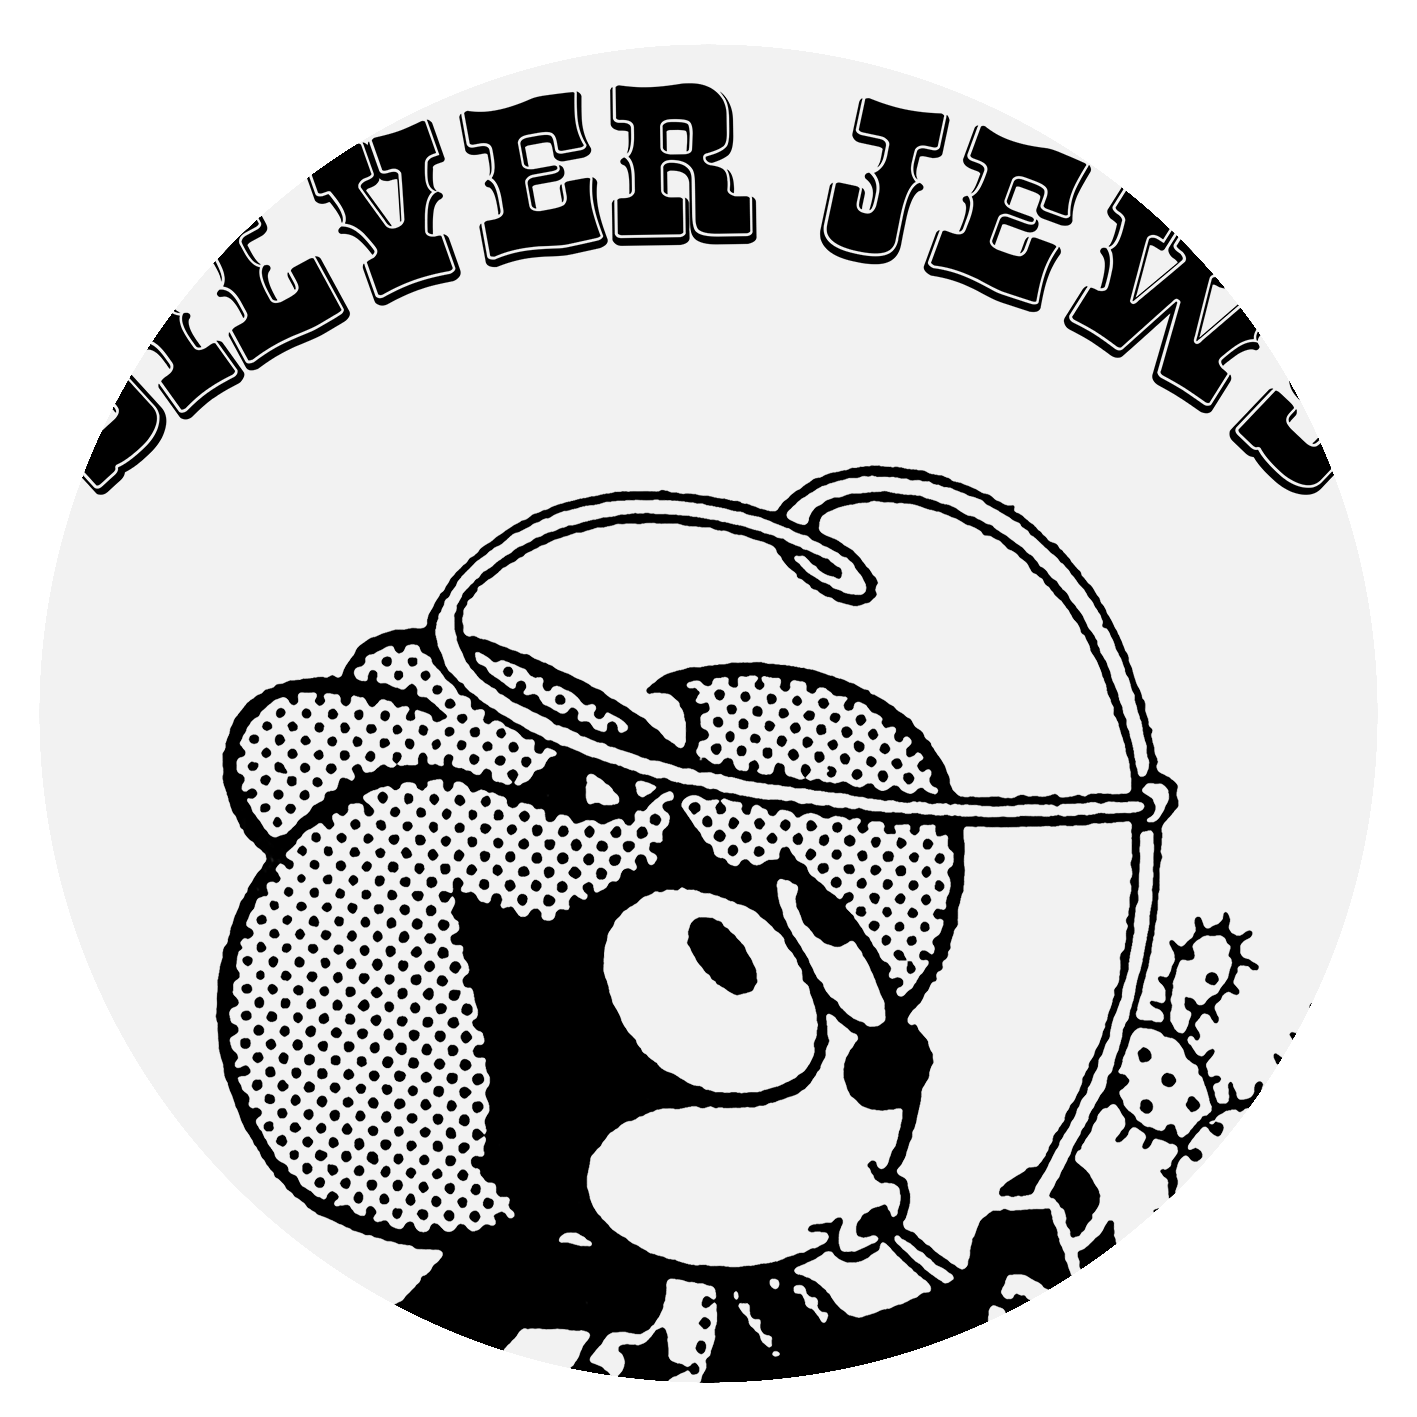 Silver Jews - Felix